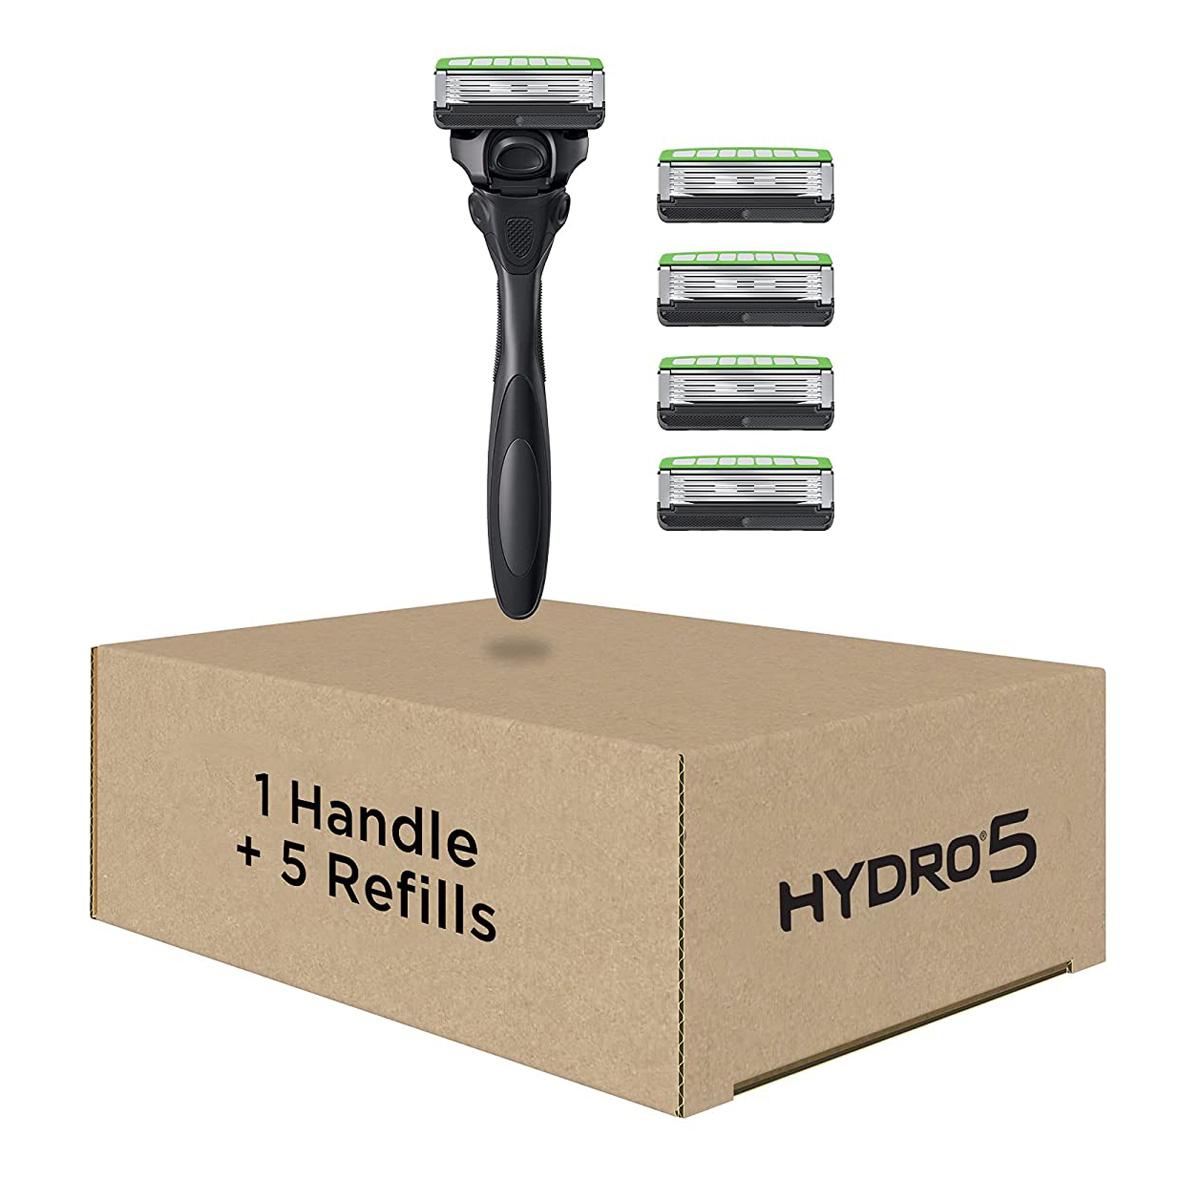 Schick Hydro Skin Comfort Sensitive 5 Blade Razor for $8.97